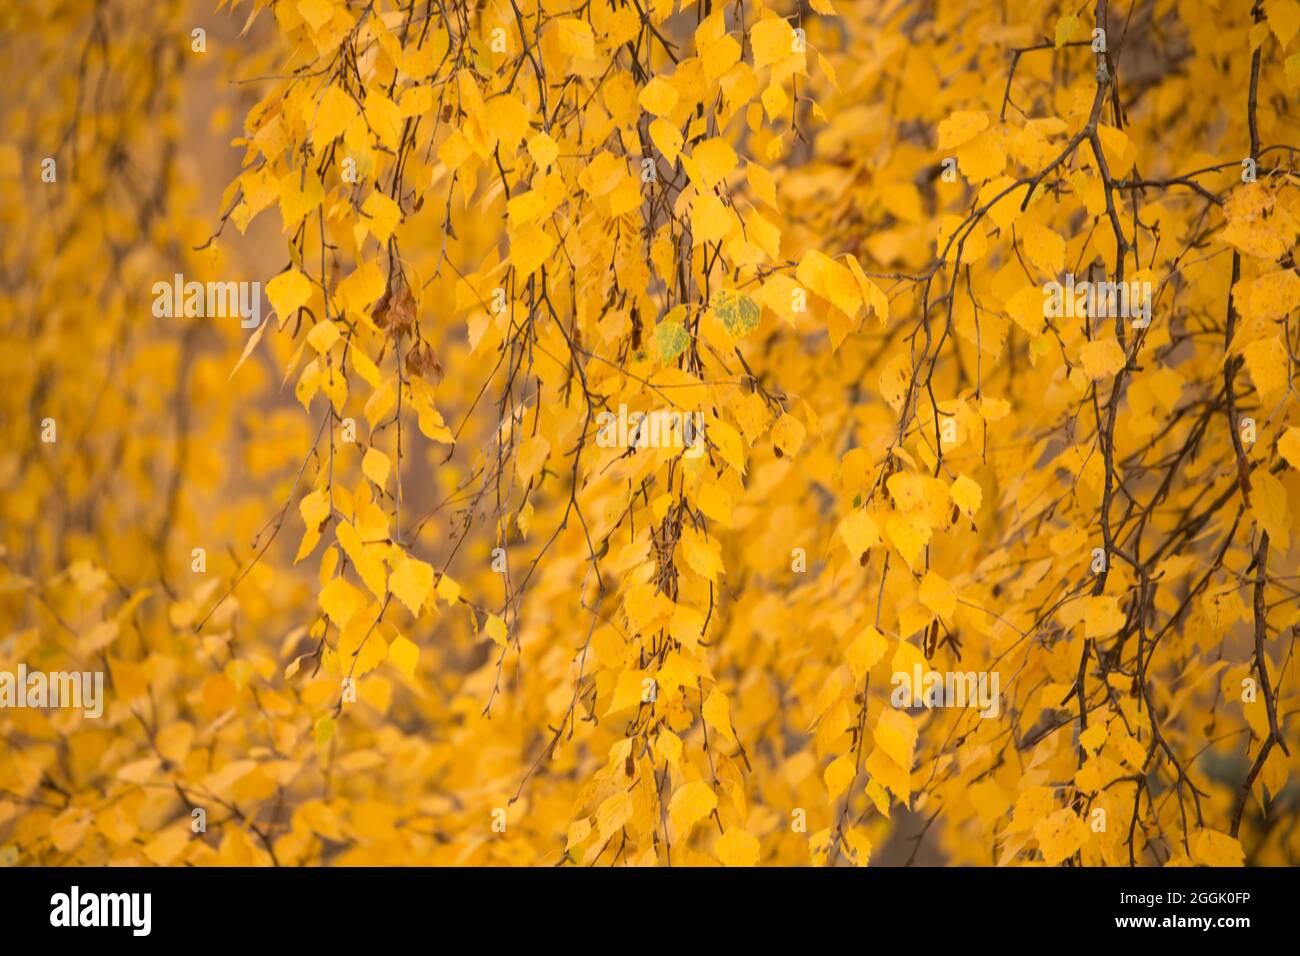 Abedul (Betula péndula) hojas de color amarillo otoño, ramas colgantes, fondo natural borroso, escena de otoño Foto de stock